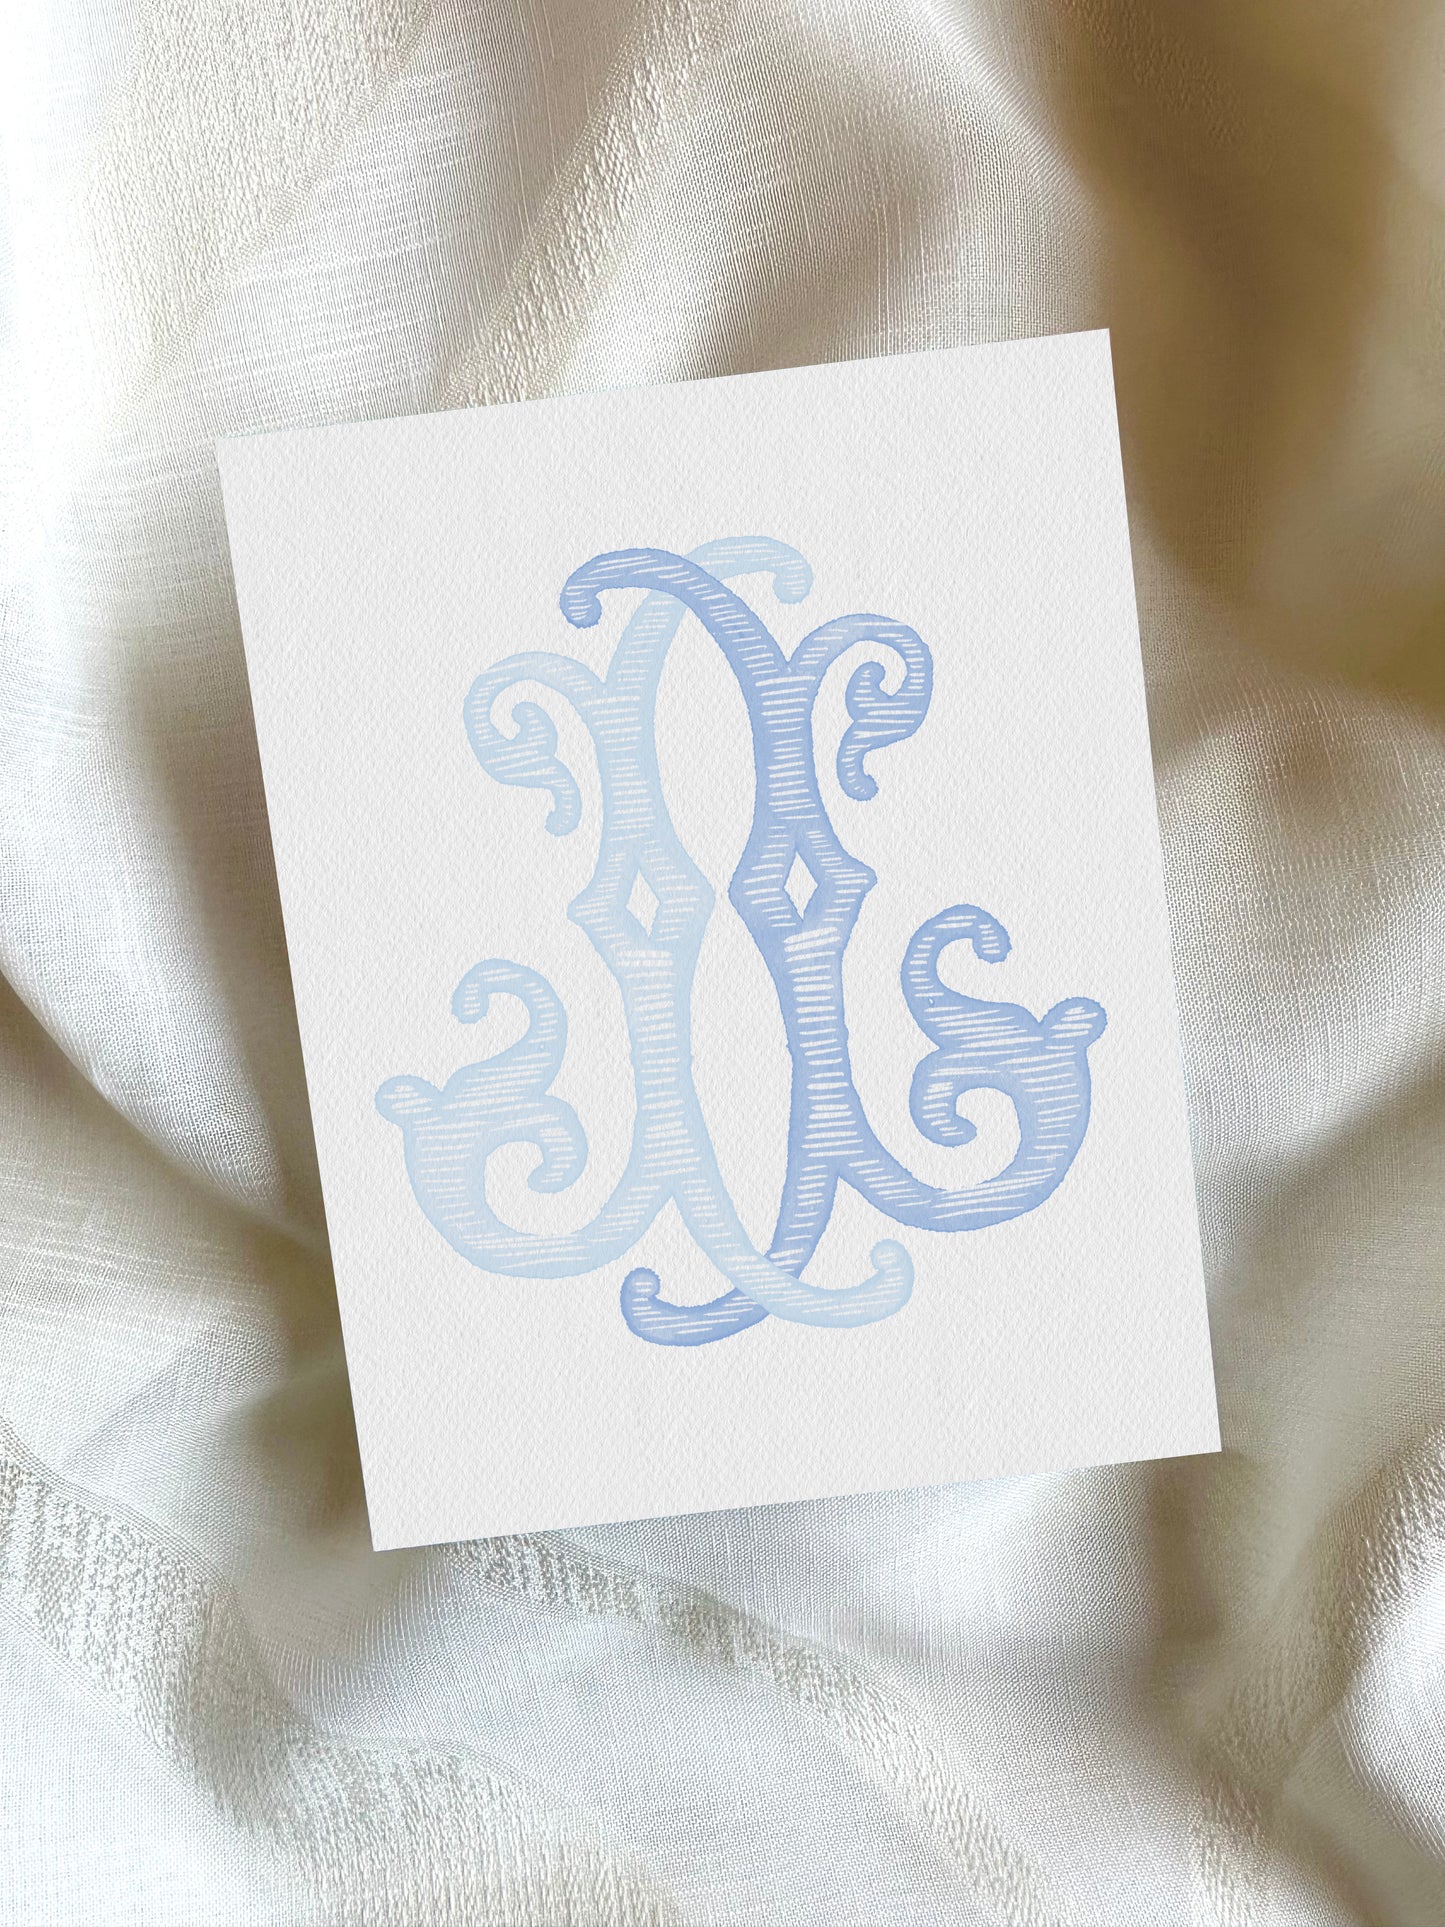 2 Letter Monogram with Letters JJ | Digital Download - Wedding Monogram SVG, Personal Logo, Wedding Logo for Wedding Invitations The Wedding Crest Lab